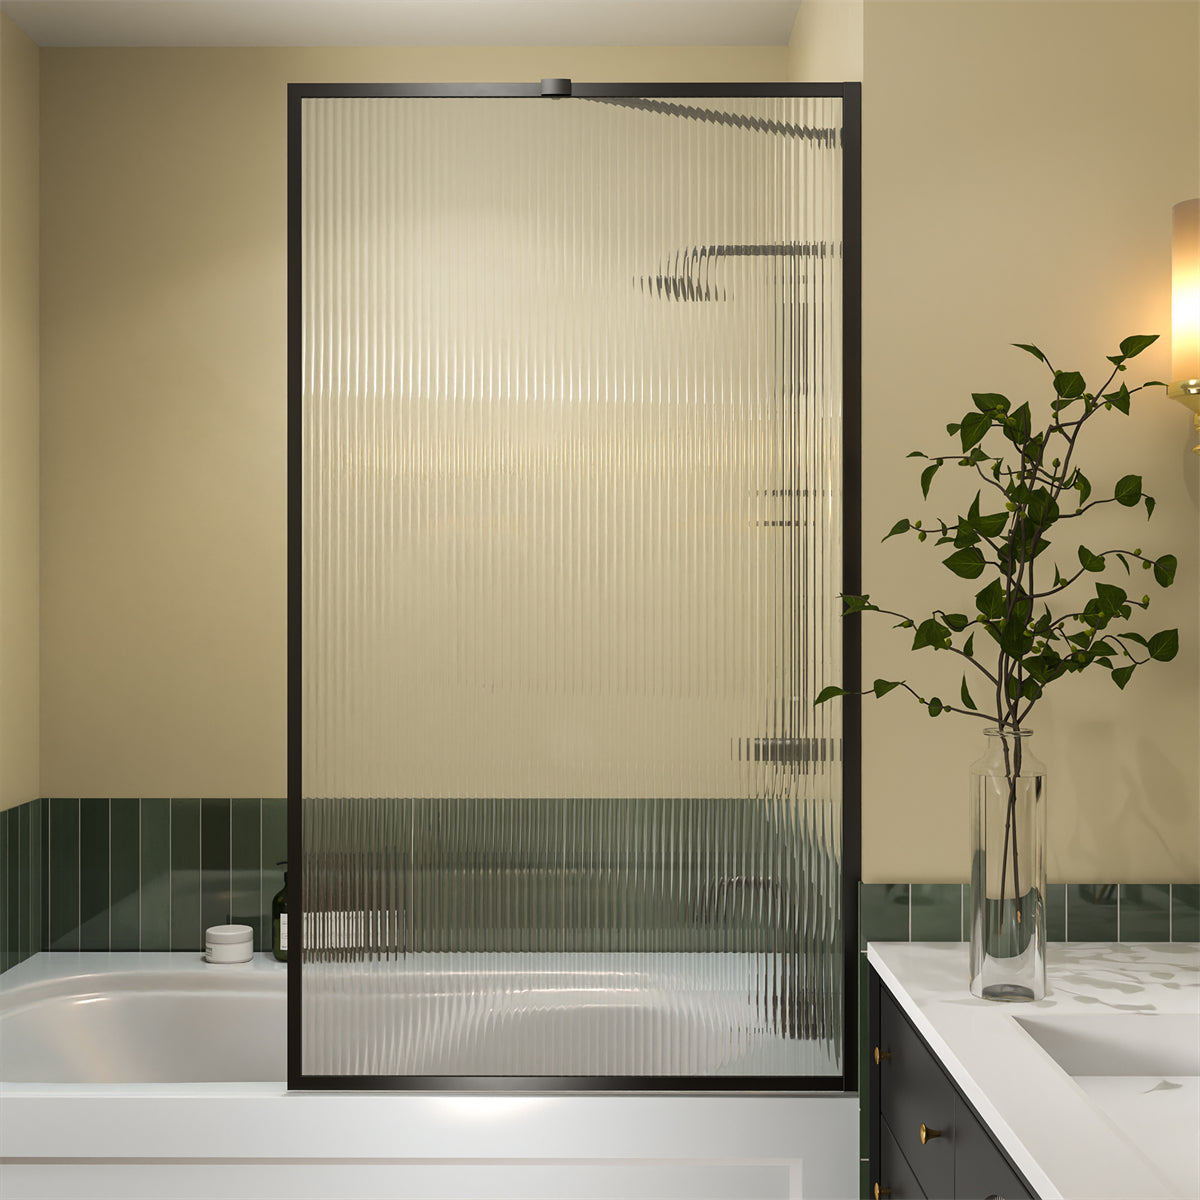 Serenity 33 X 58 Bathtub Screen Reeded Glass Shower Panel For Bathtub,Matte Black Finish,Reversible Installation,Square